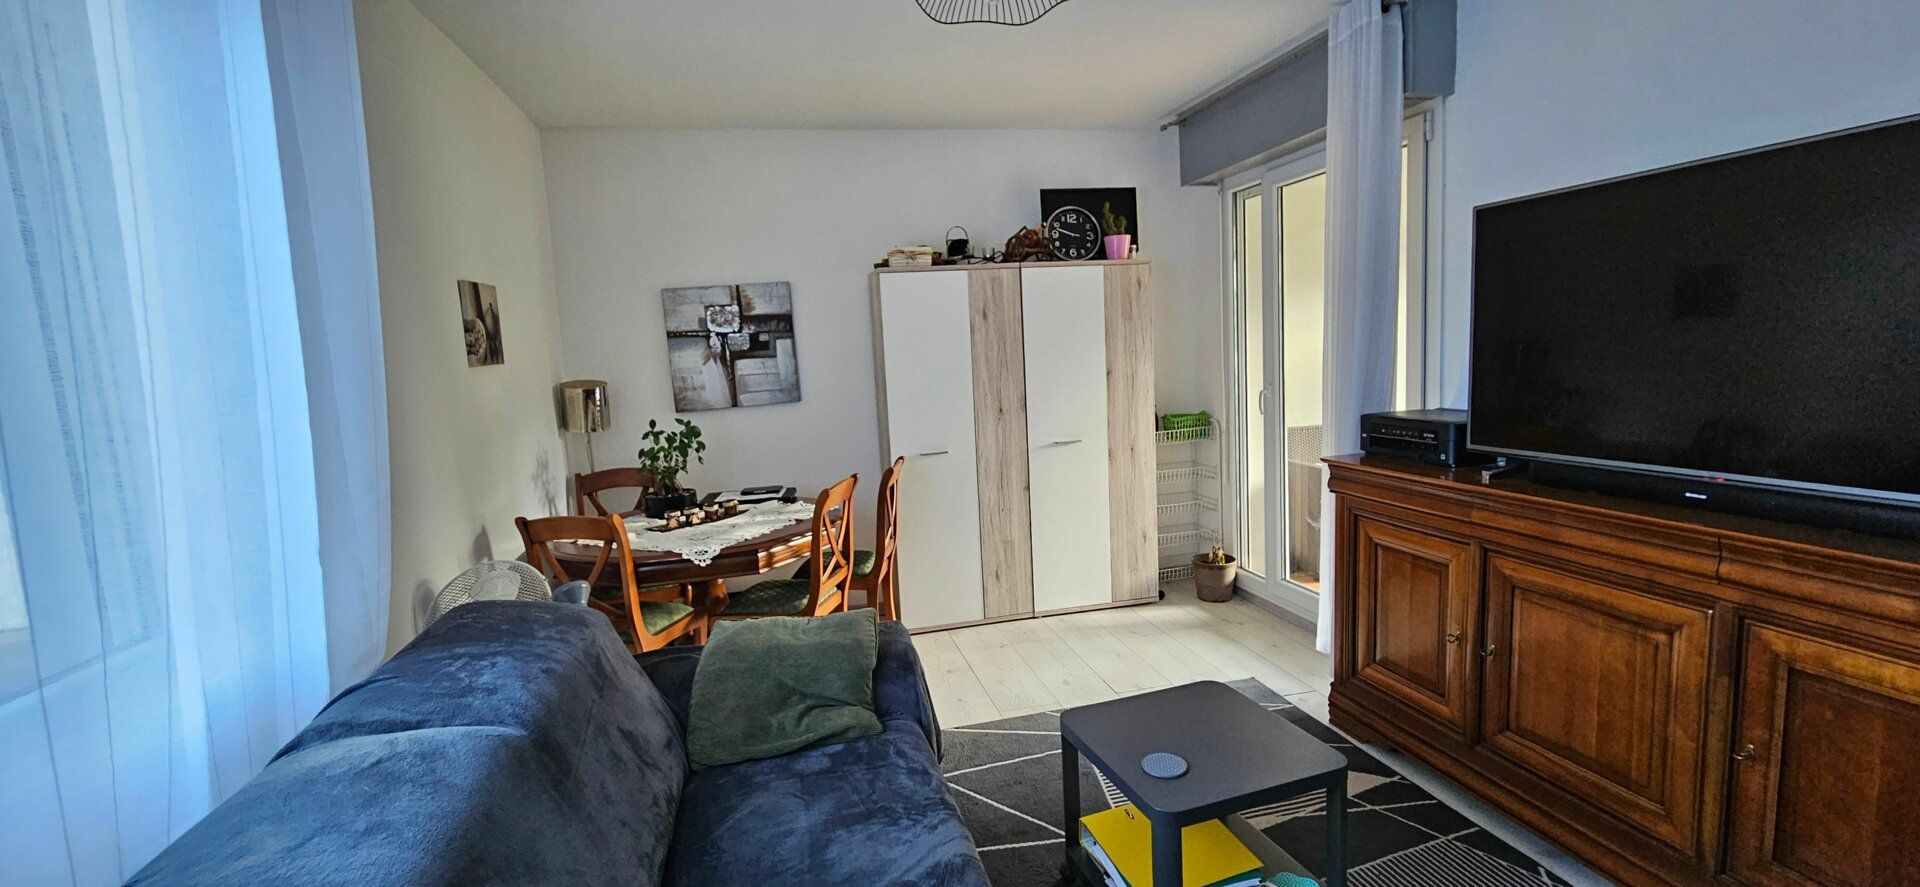 Appartement à vendre 3 66m2 à Betschdorf vignette-2